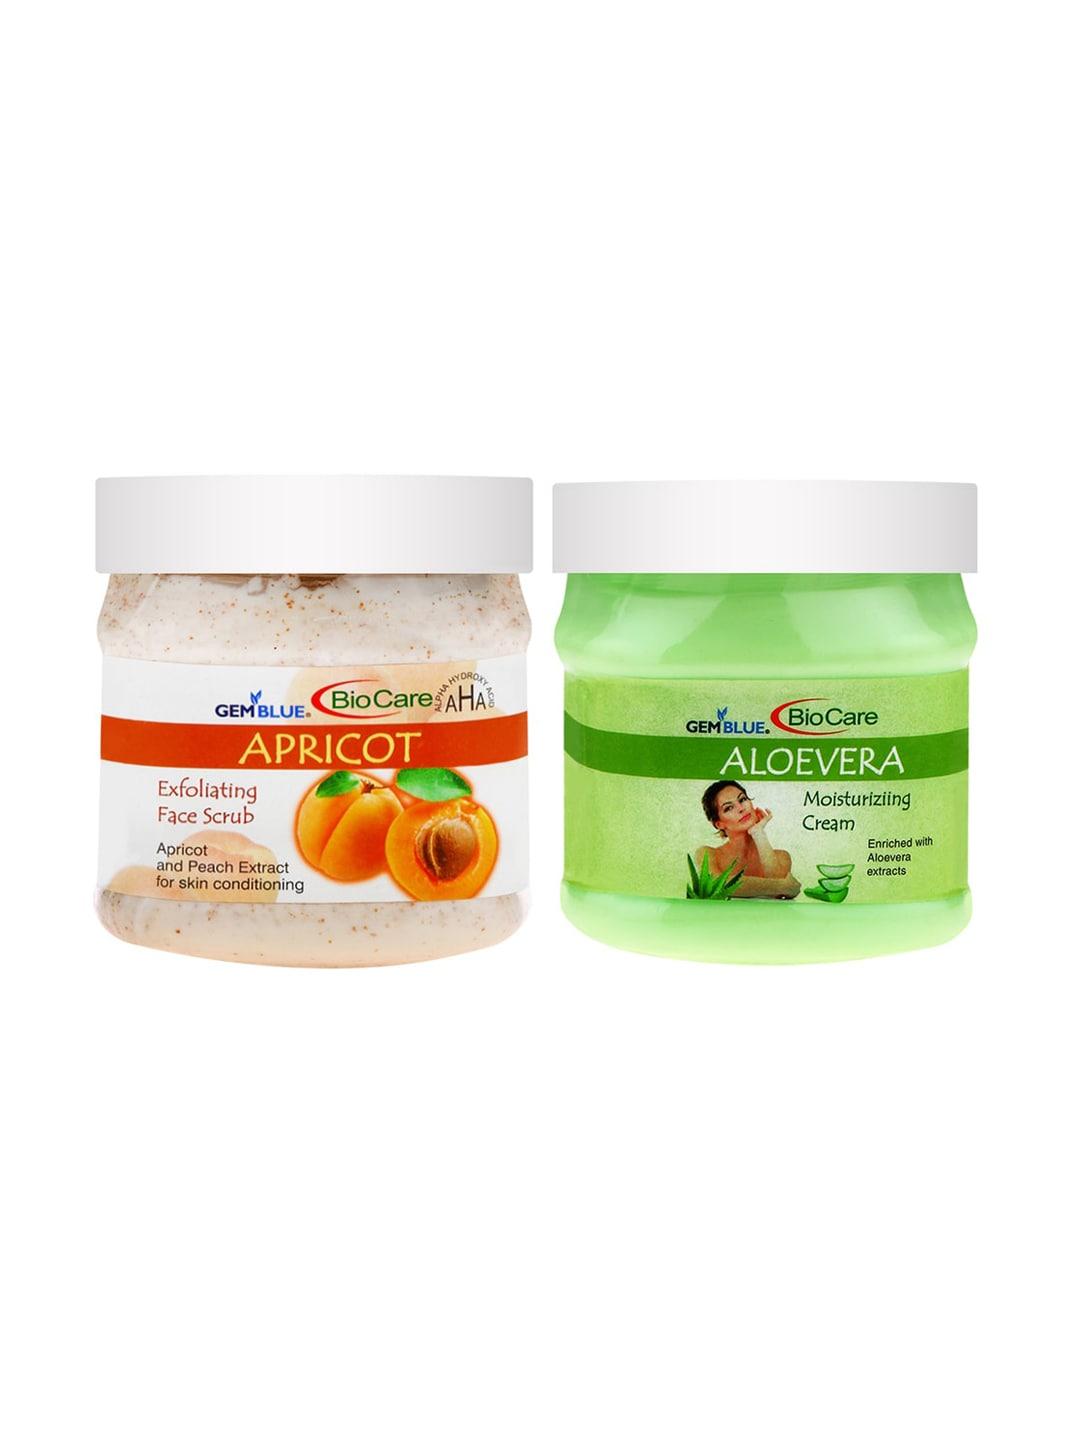 gemblue biocare set of apricoat scrub & aloevera cream 500ml each